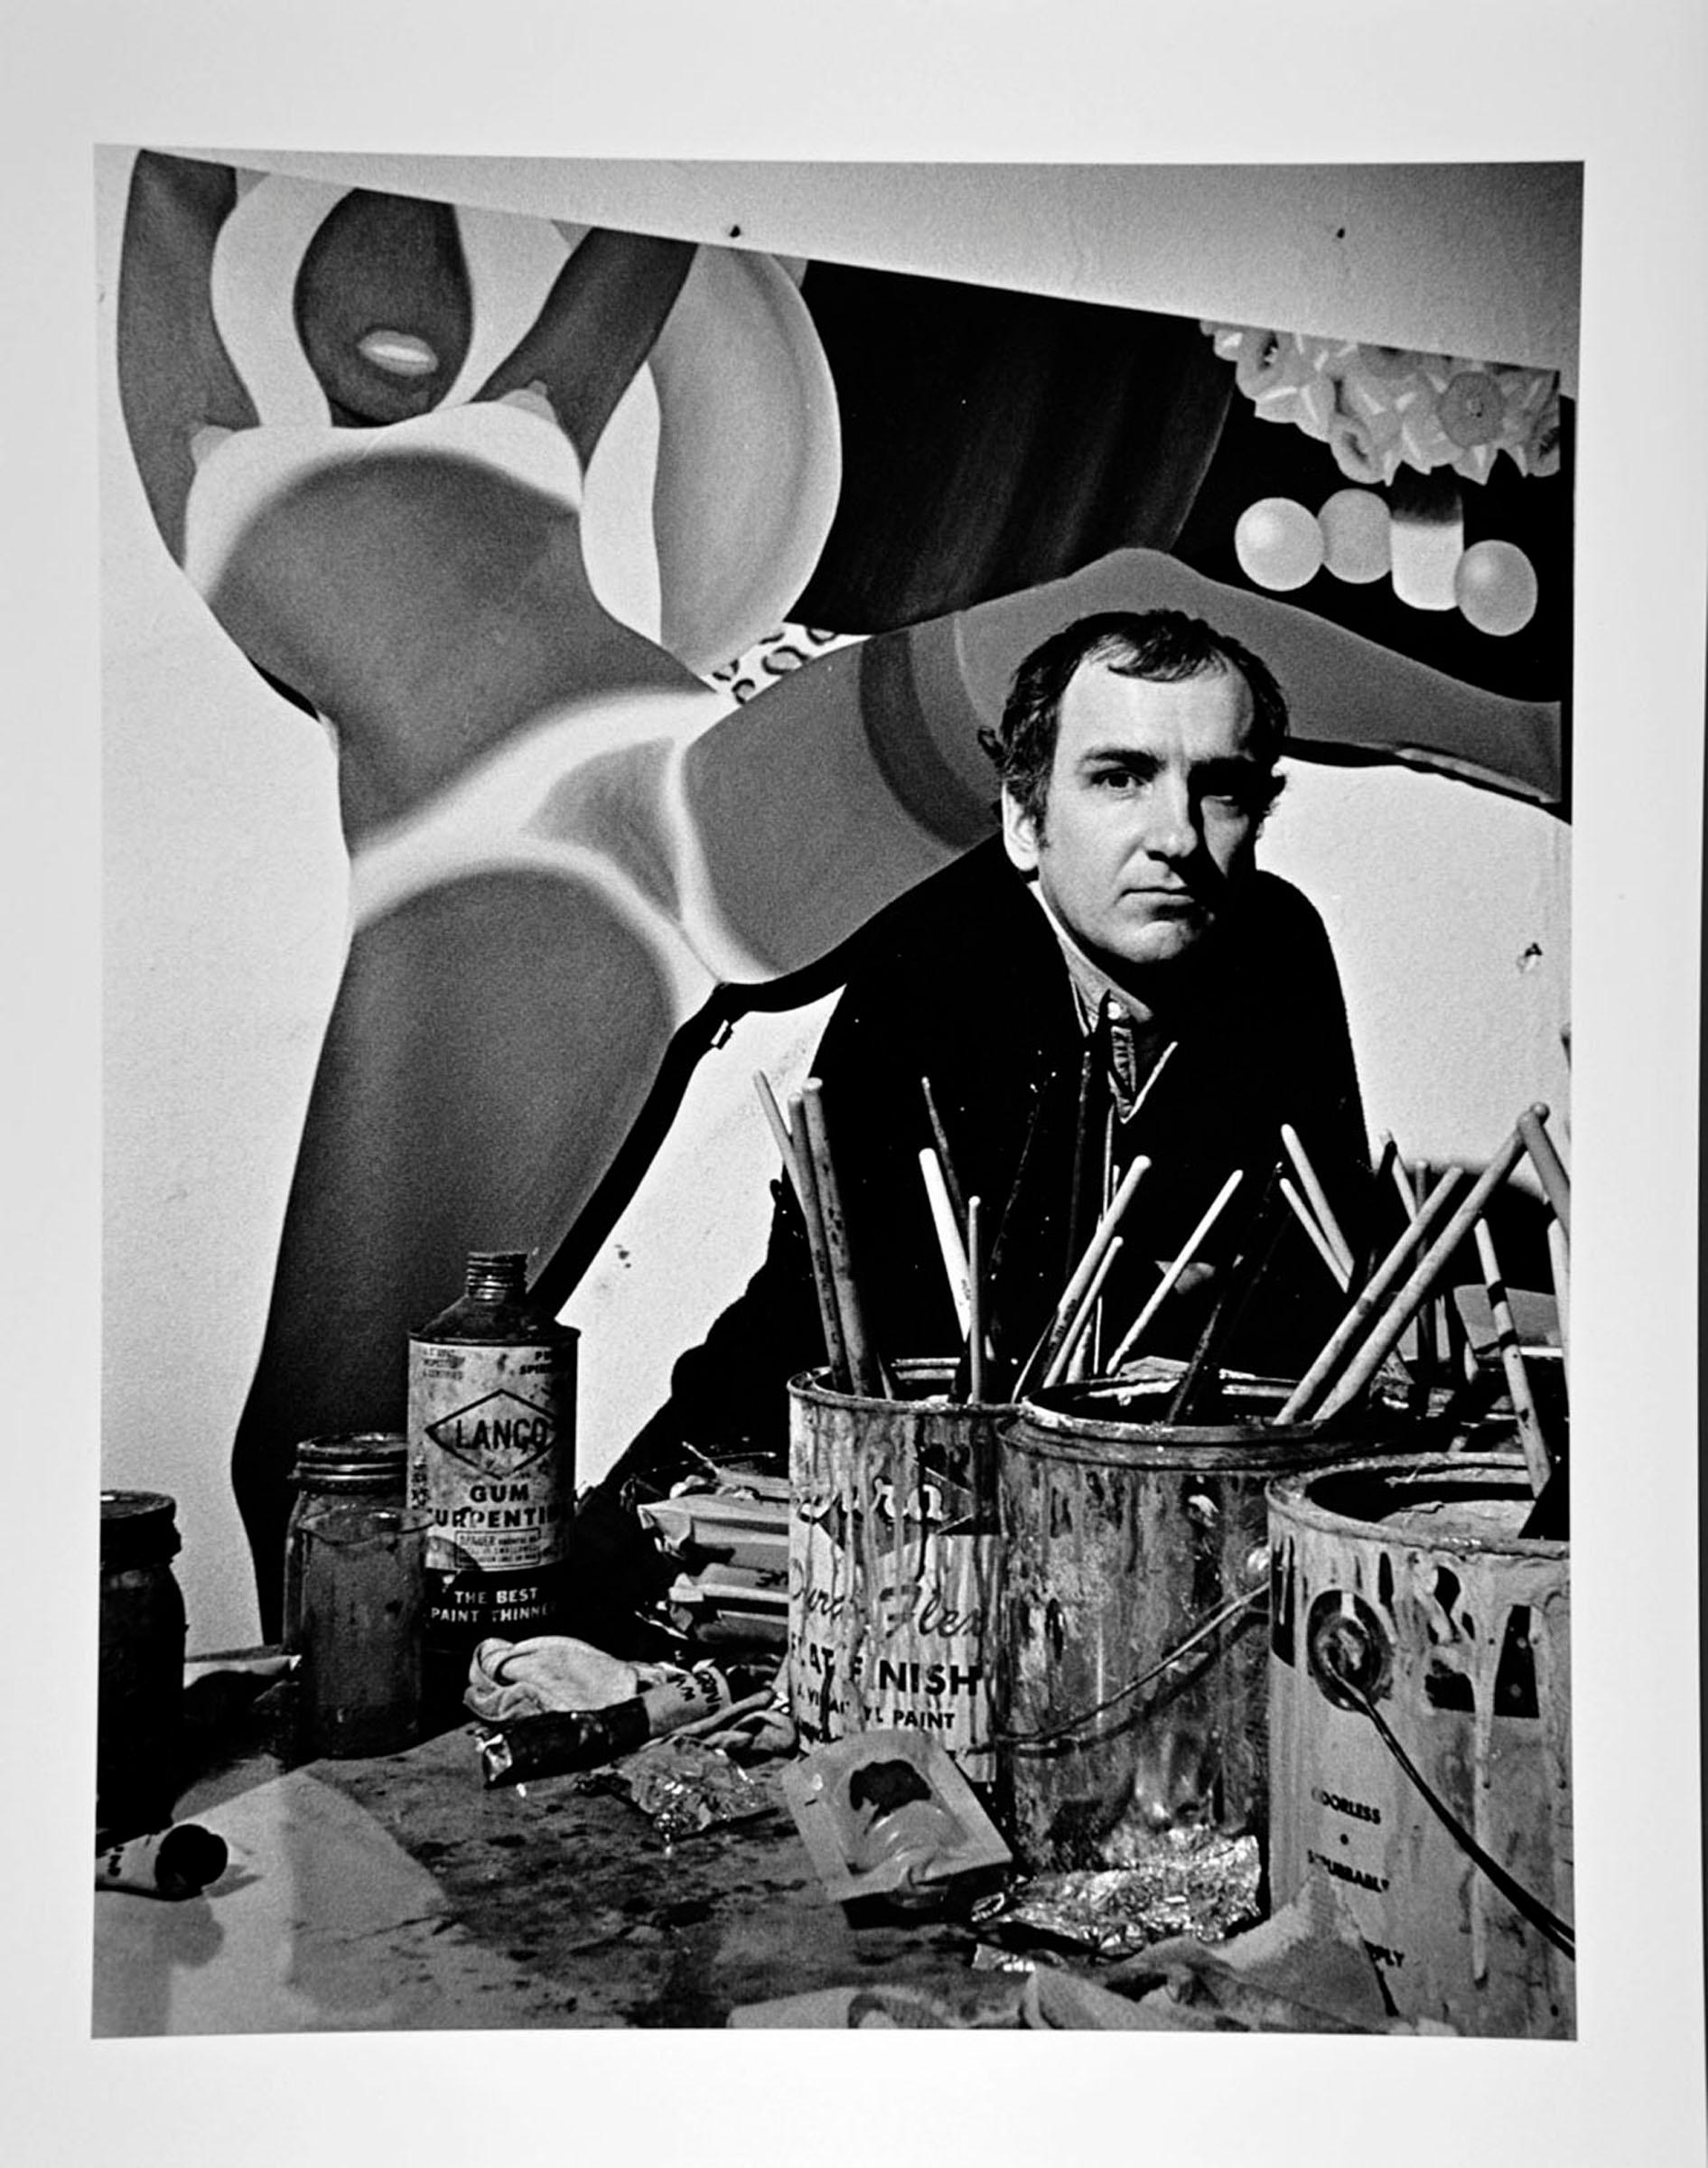  Artist Tom Wesselmann in his New York City studio